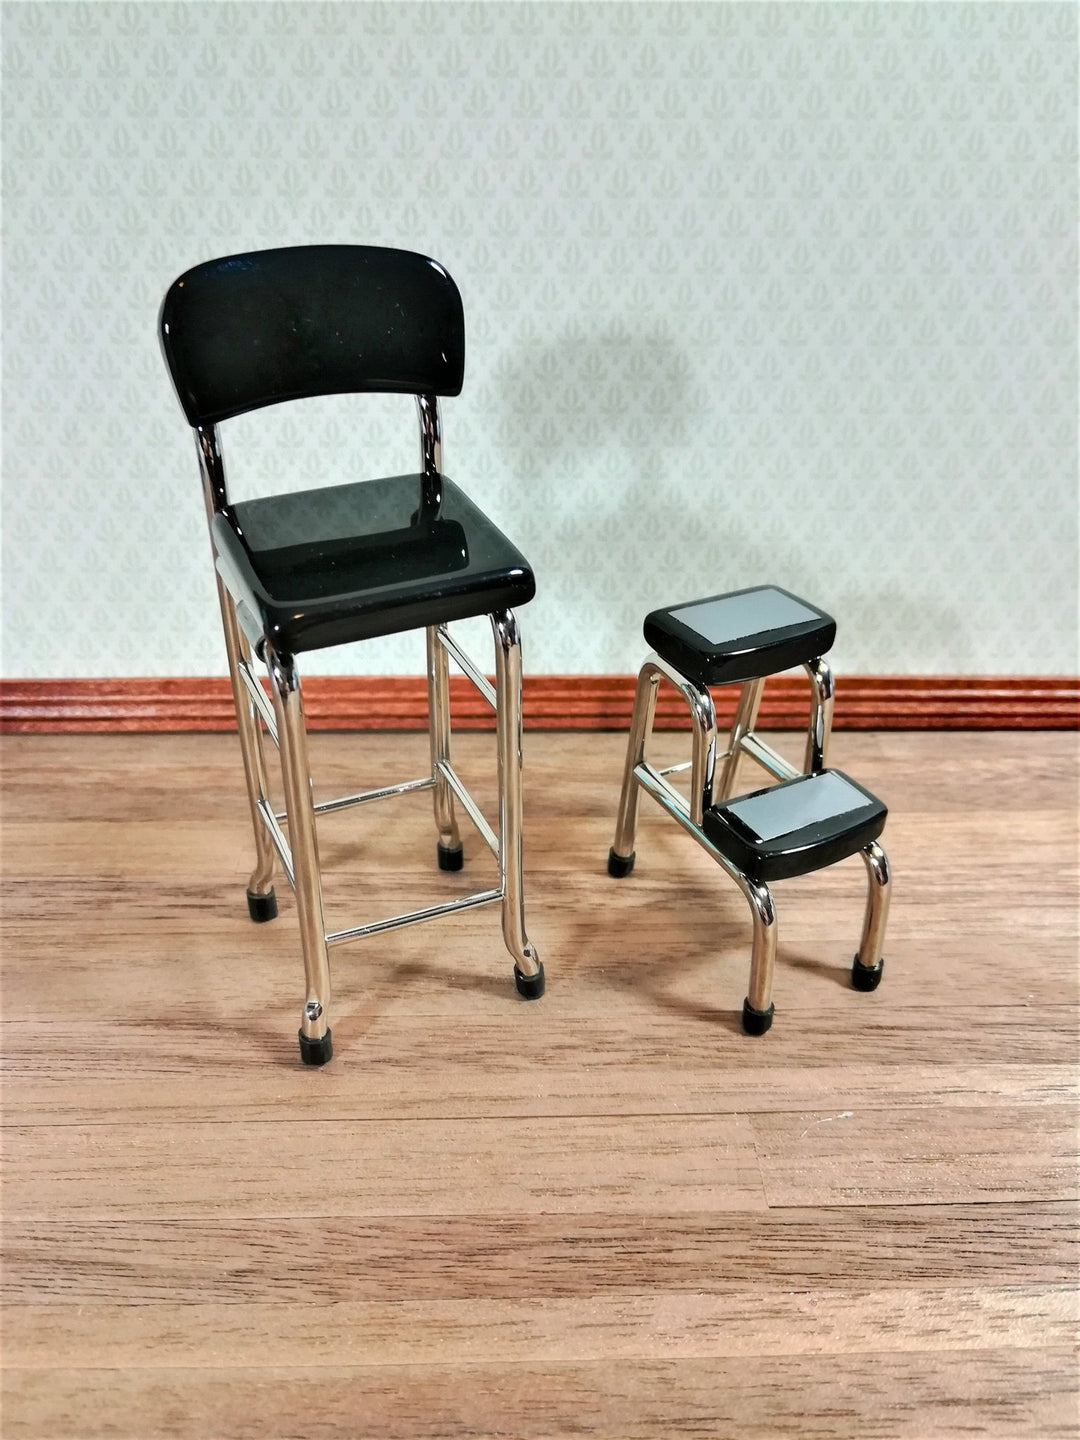 Dollhouse Retro Step Stool Tall Chair 1950s Style Black 1:12 Scale Miniature - Miniature Crush